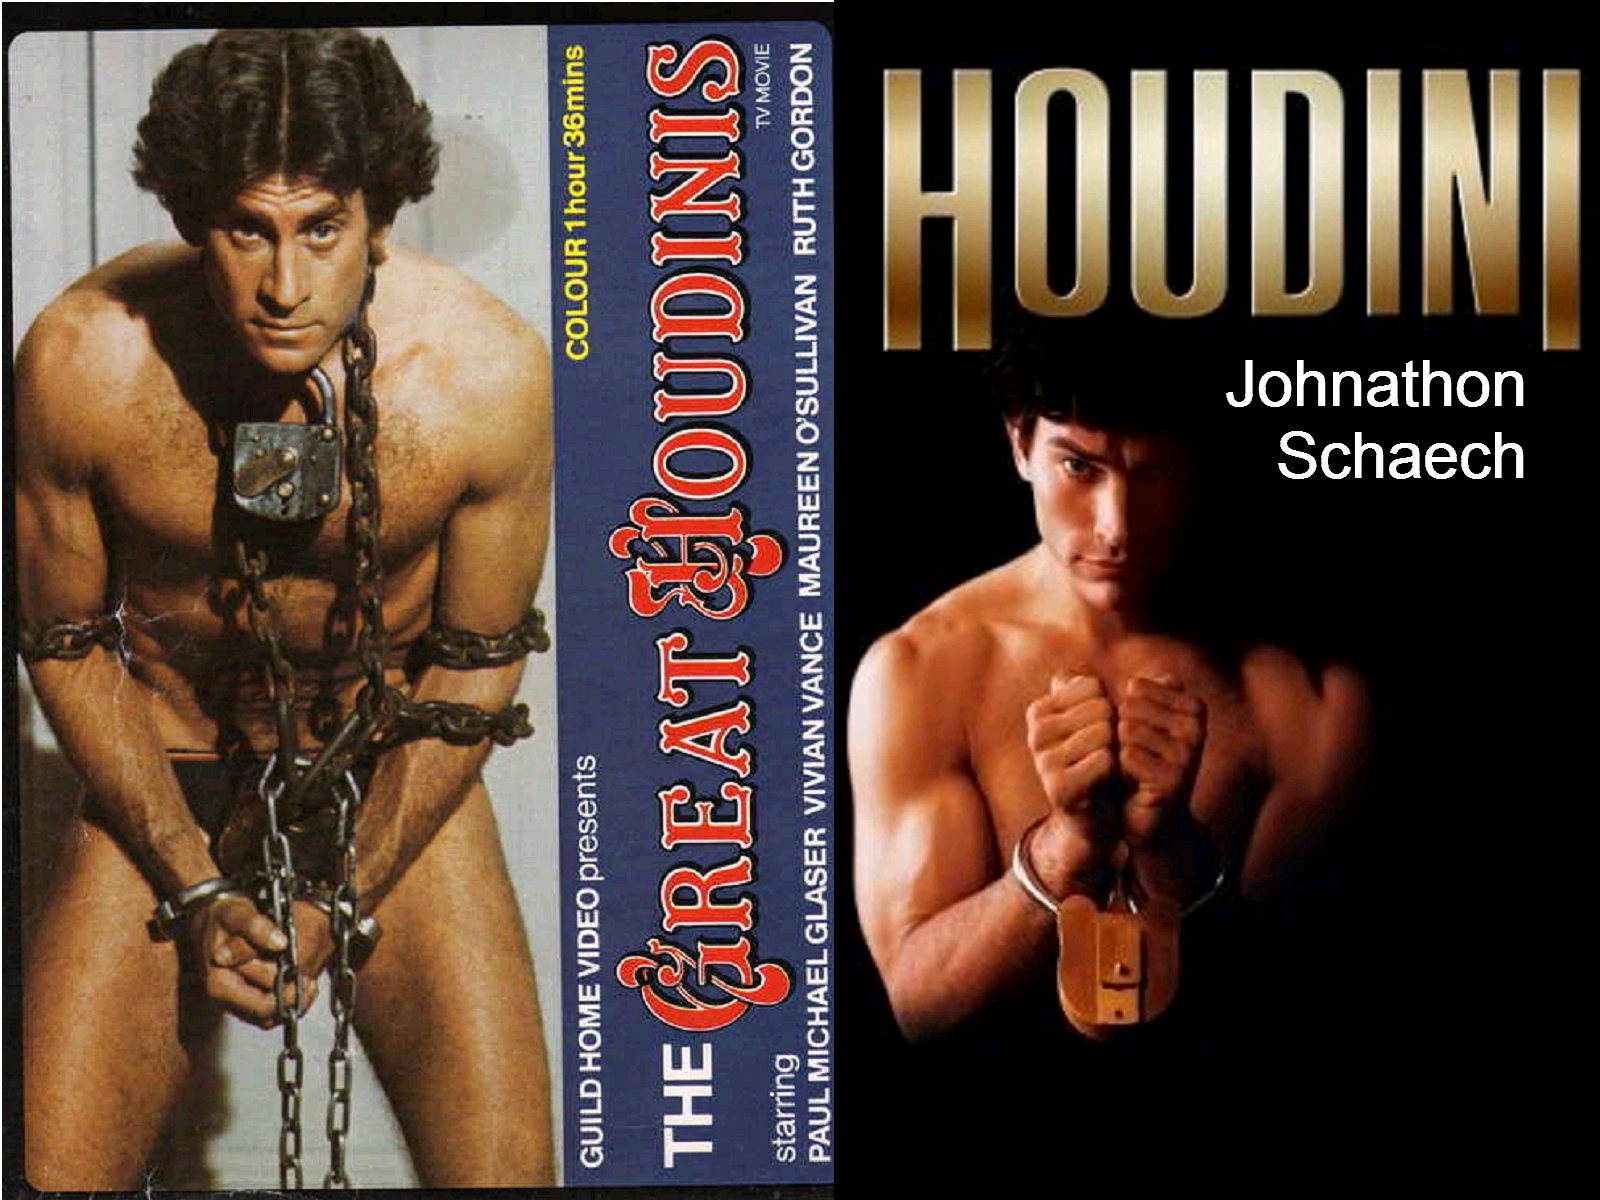 http://4.bp.blogspot.com/-4HnLgtrTSrk/T6xiaqIz5BI/AAAAAAAADAQ/tyDlJrJdpjY/s1600/Houdini%2Bdouble%2Bad.jpg